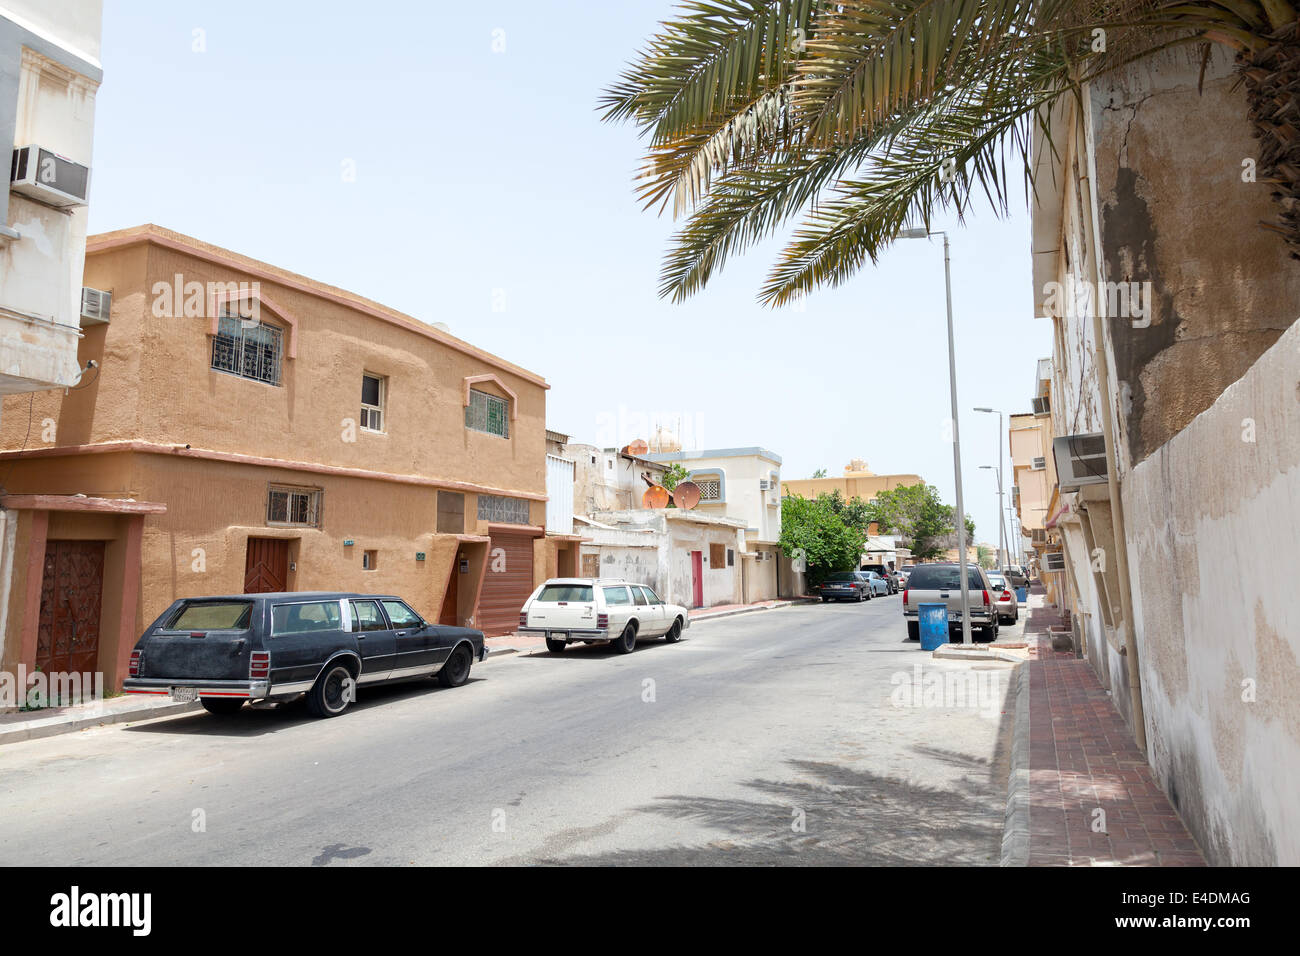 RAS TANURA, Arabia Saudita - 10 Maggio 2014: Street View di automobili parcheggiate, Arabia Saudita Foto Stock